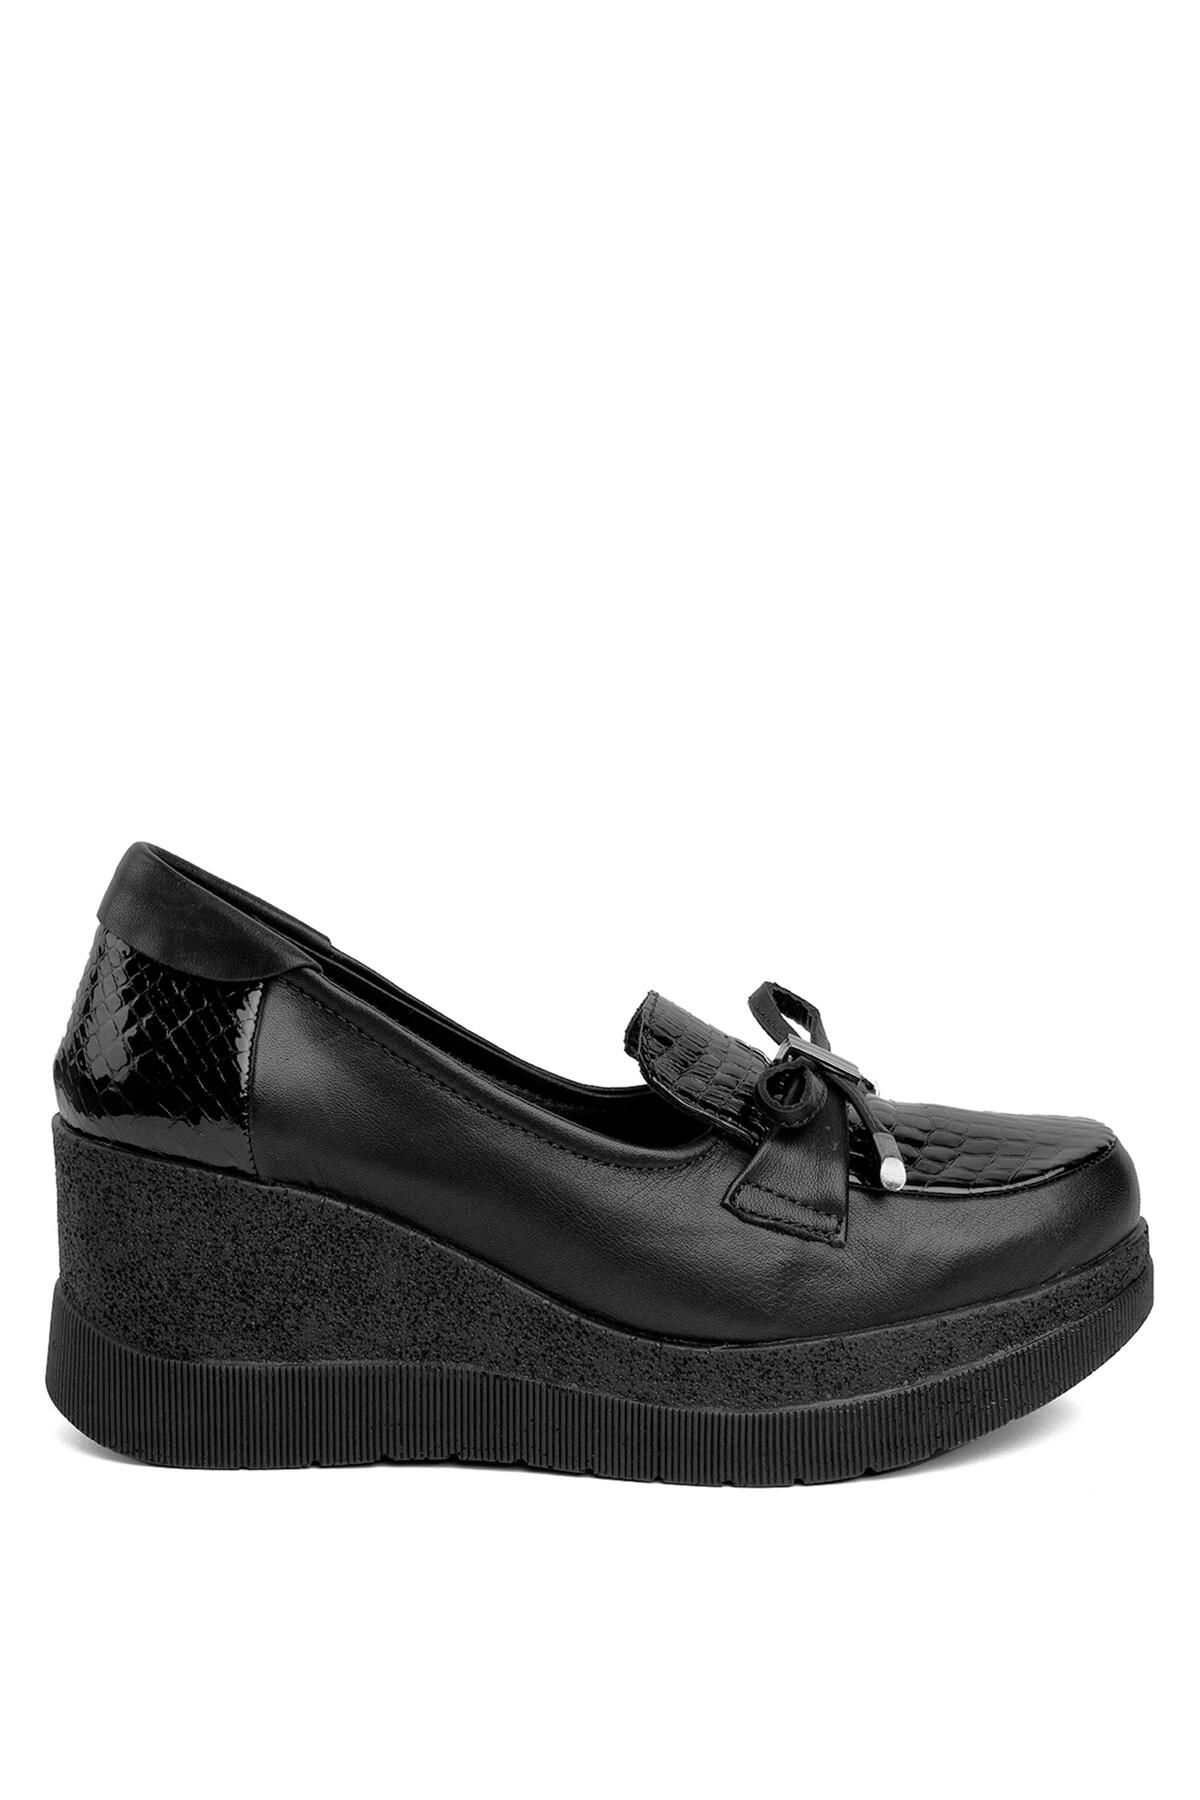 Mammamia D24YA-3820R Kadın Dolgu Topuk Ayakkabı Siyah